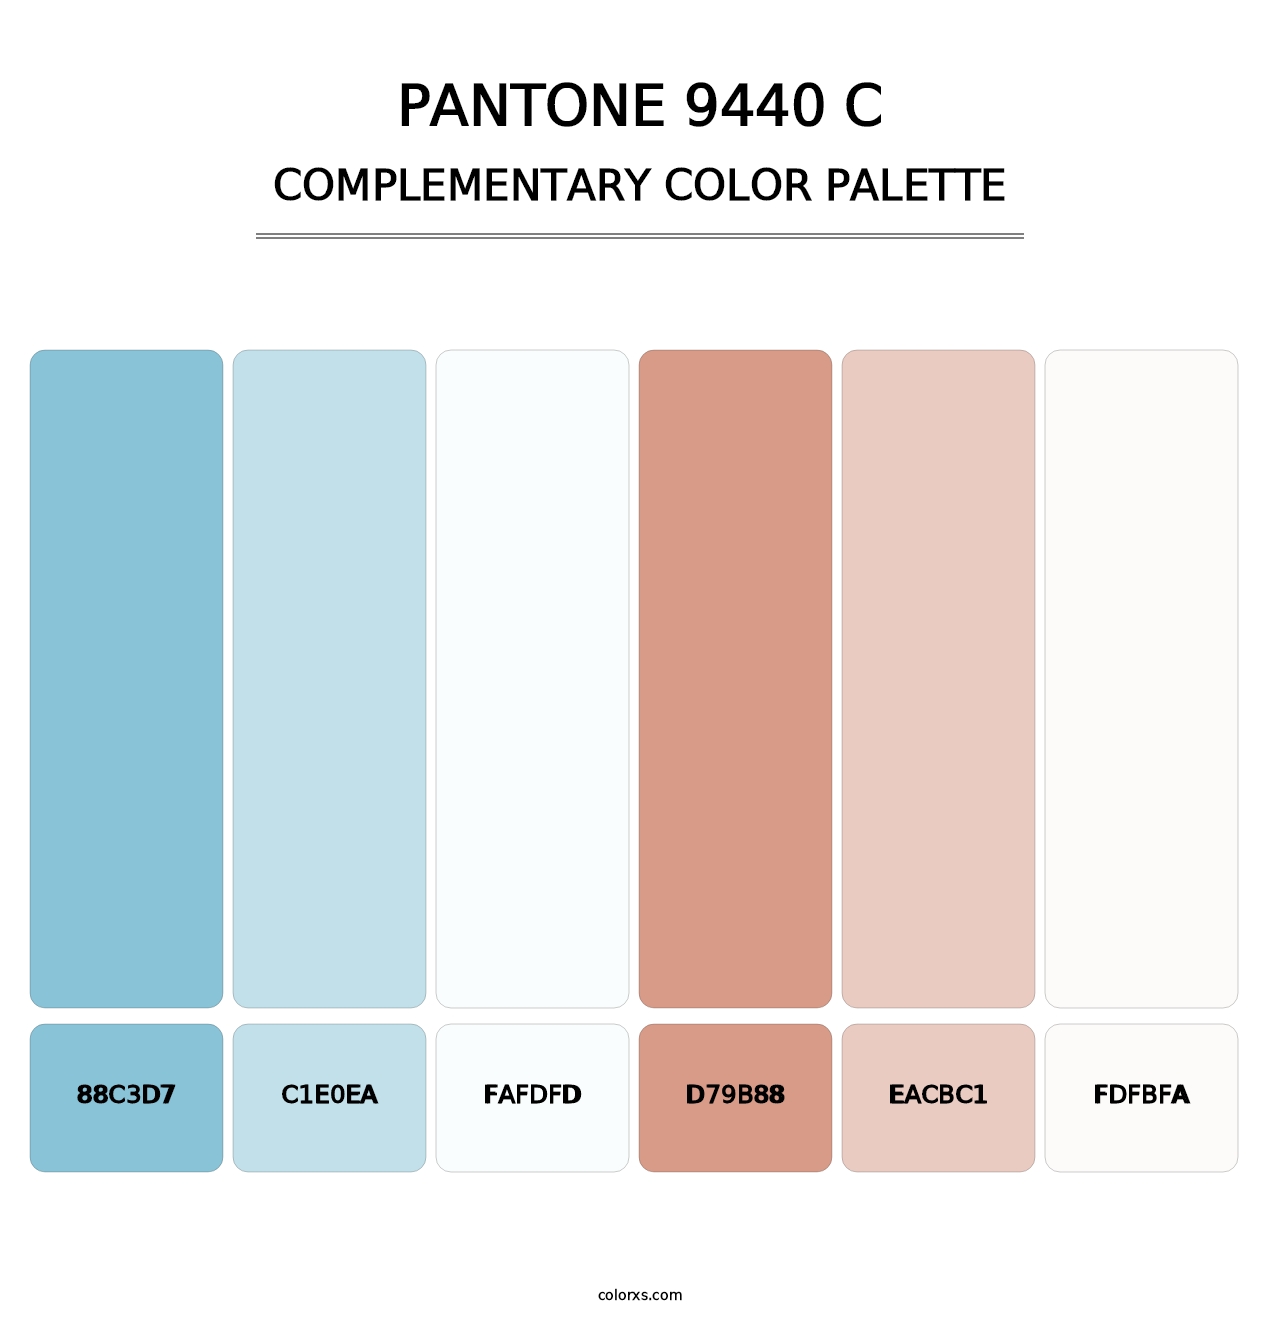 PANTONE 9440 C - Complementary Color Palette